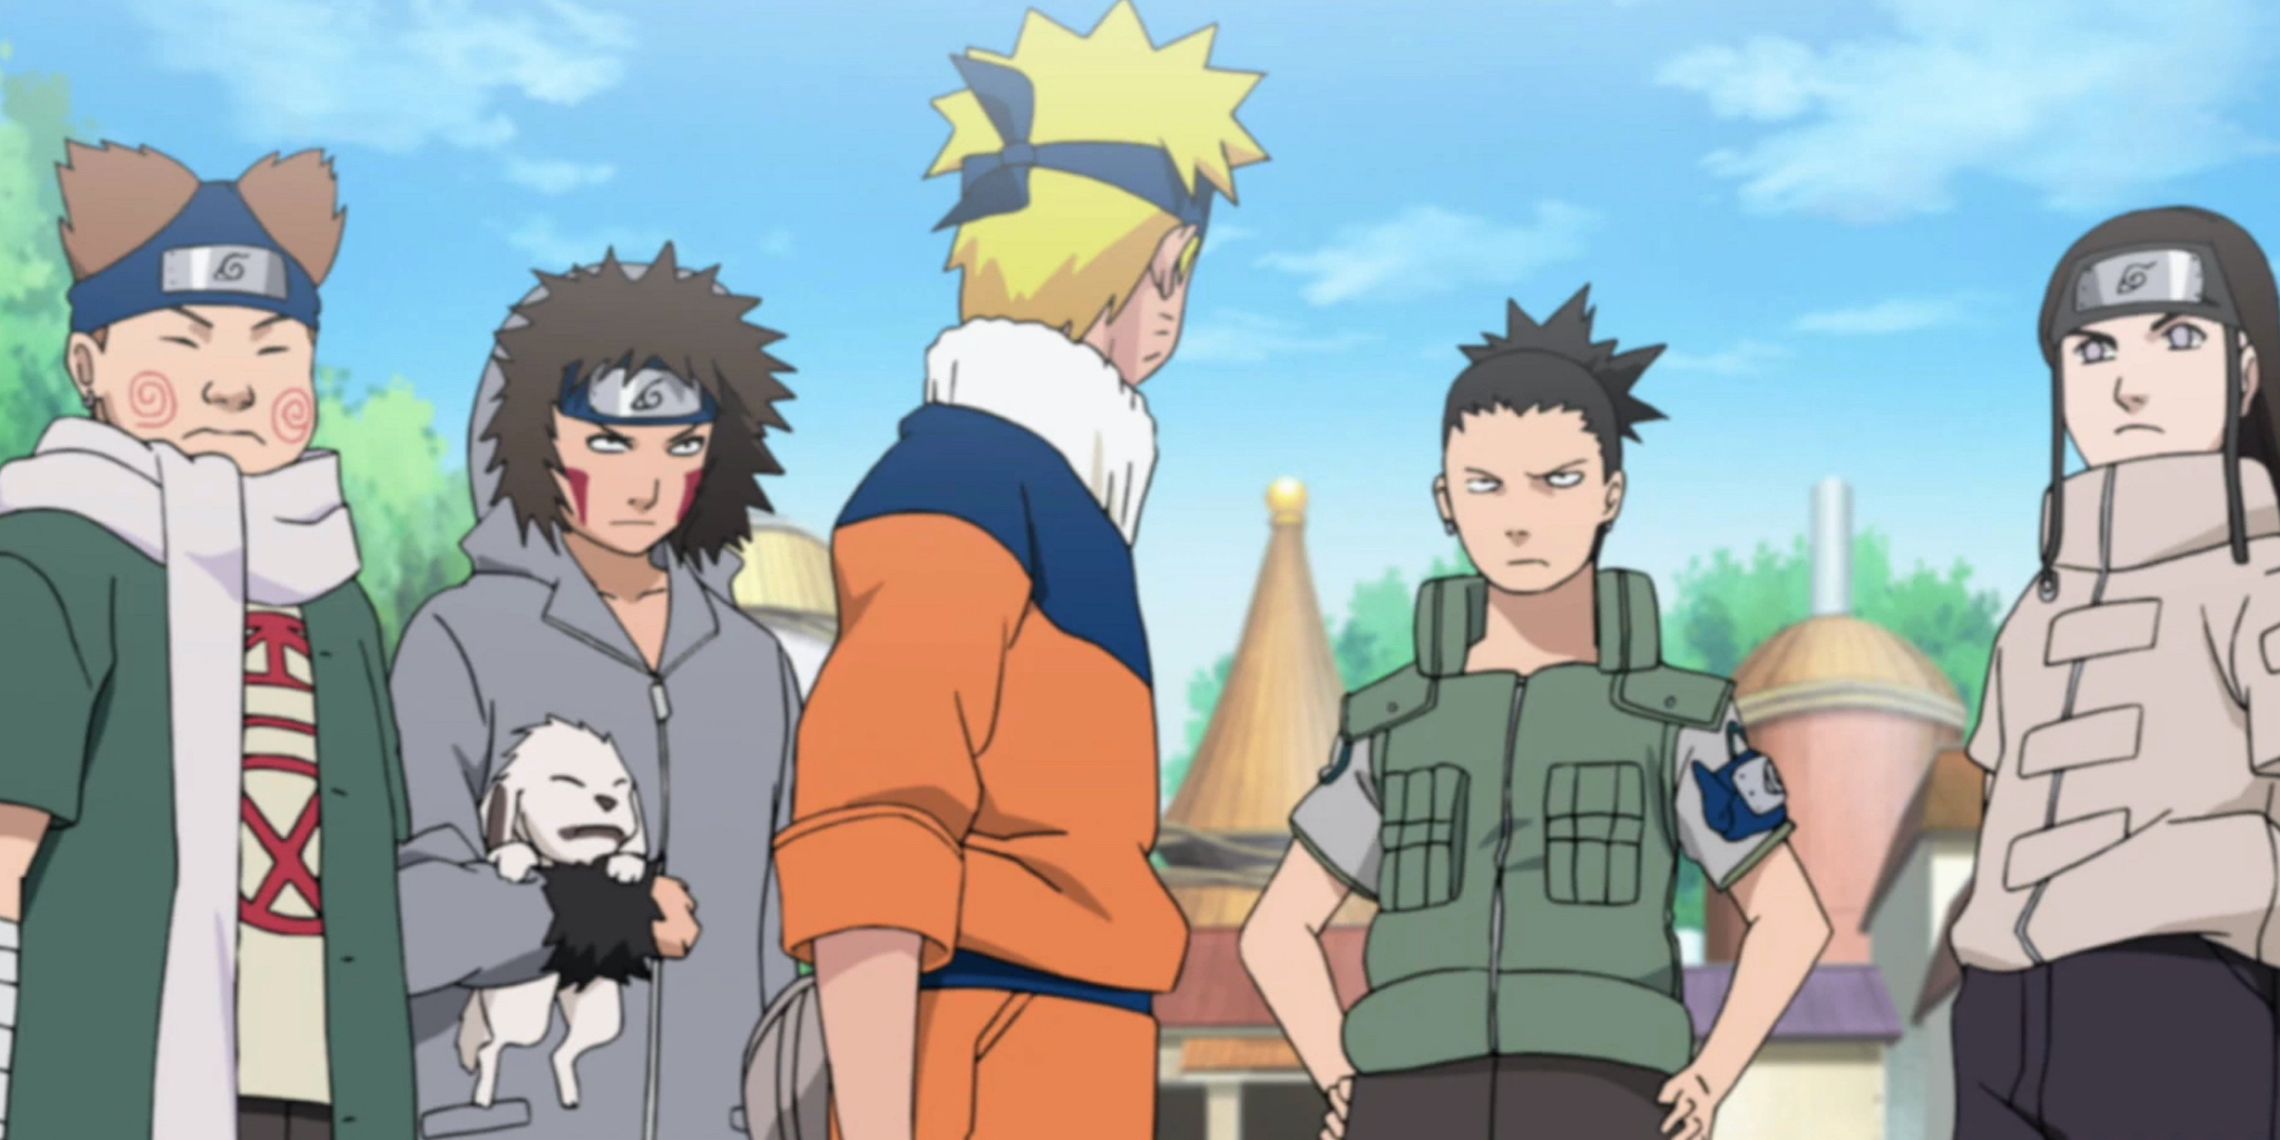 Naruto looks back at the rest of the Sasuke Recovery Team, Choji, Kiba, Shikamaru, and Neji, in Naruto